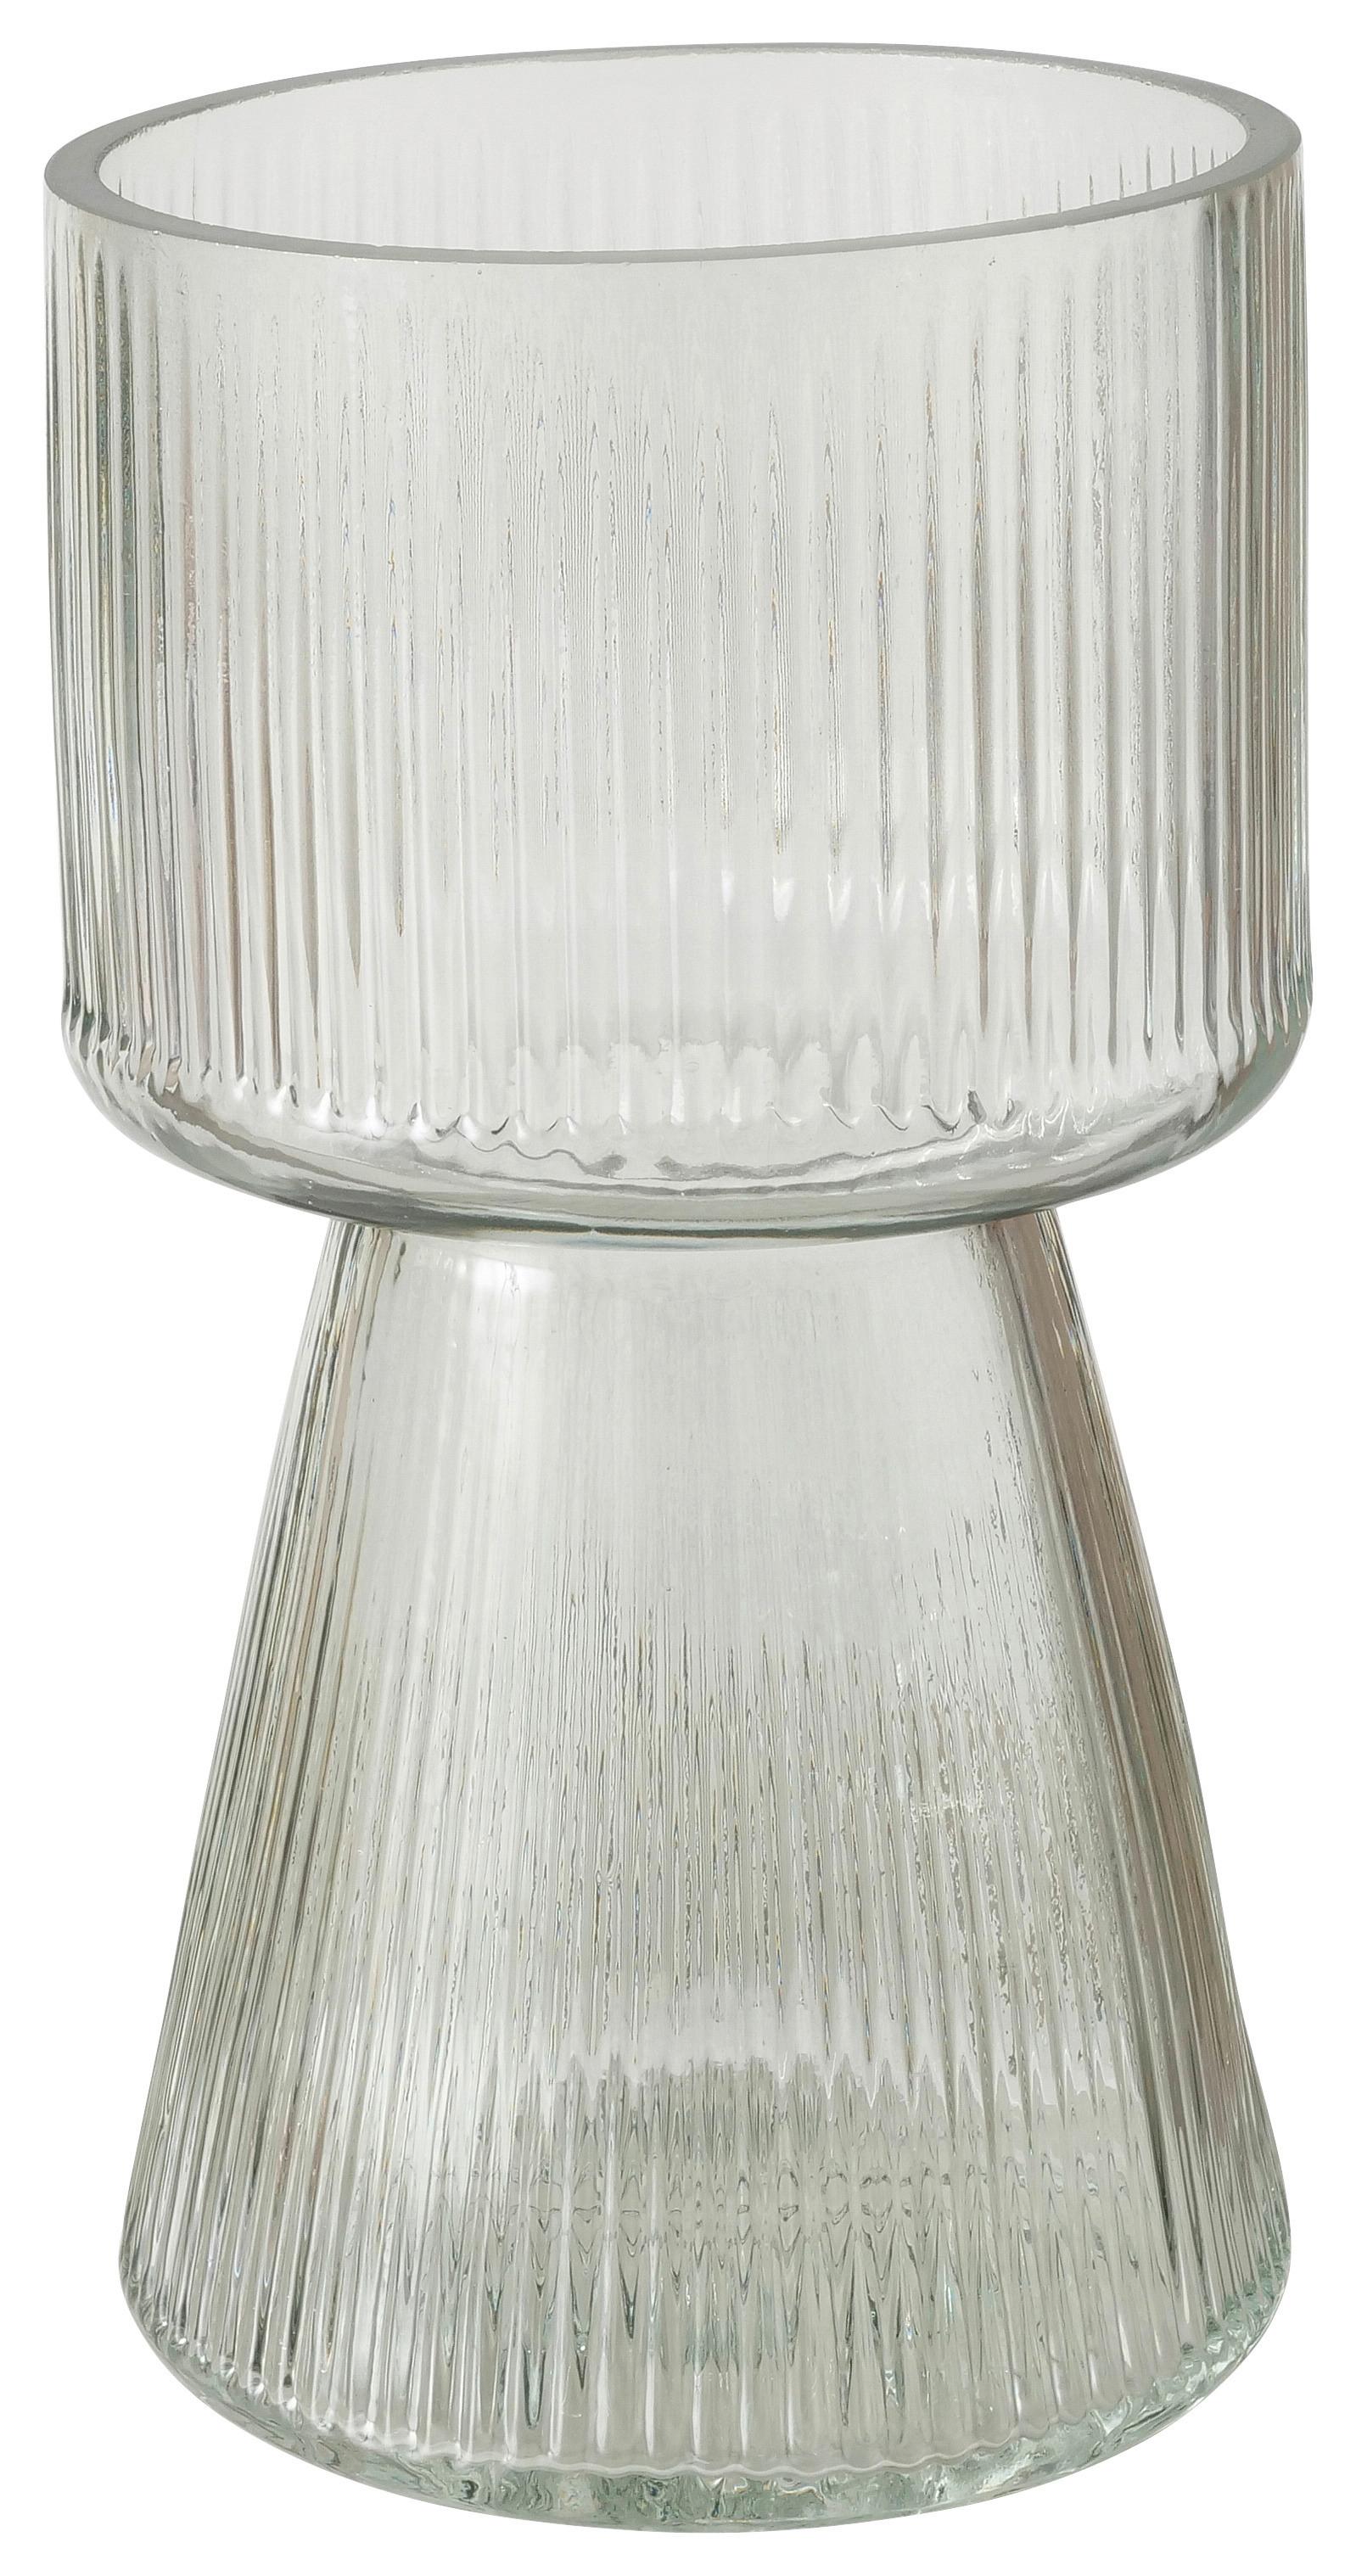 Vaza Imano I - svetlo zelena, Moderno, steklo (10/18cm) - Modern Living